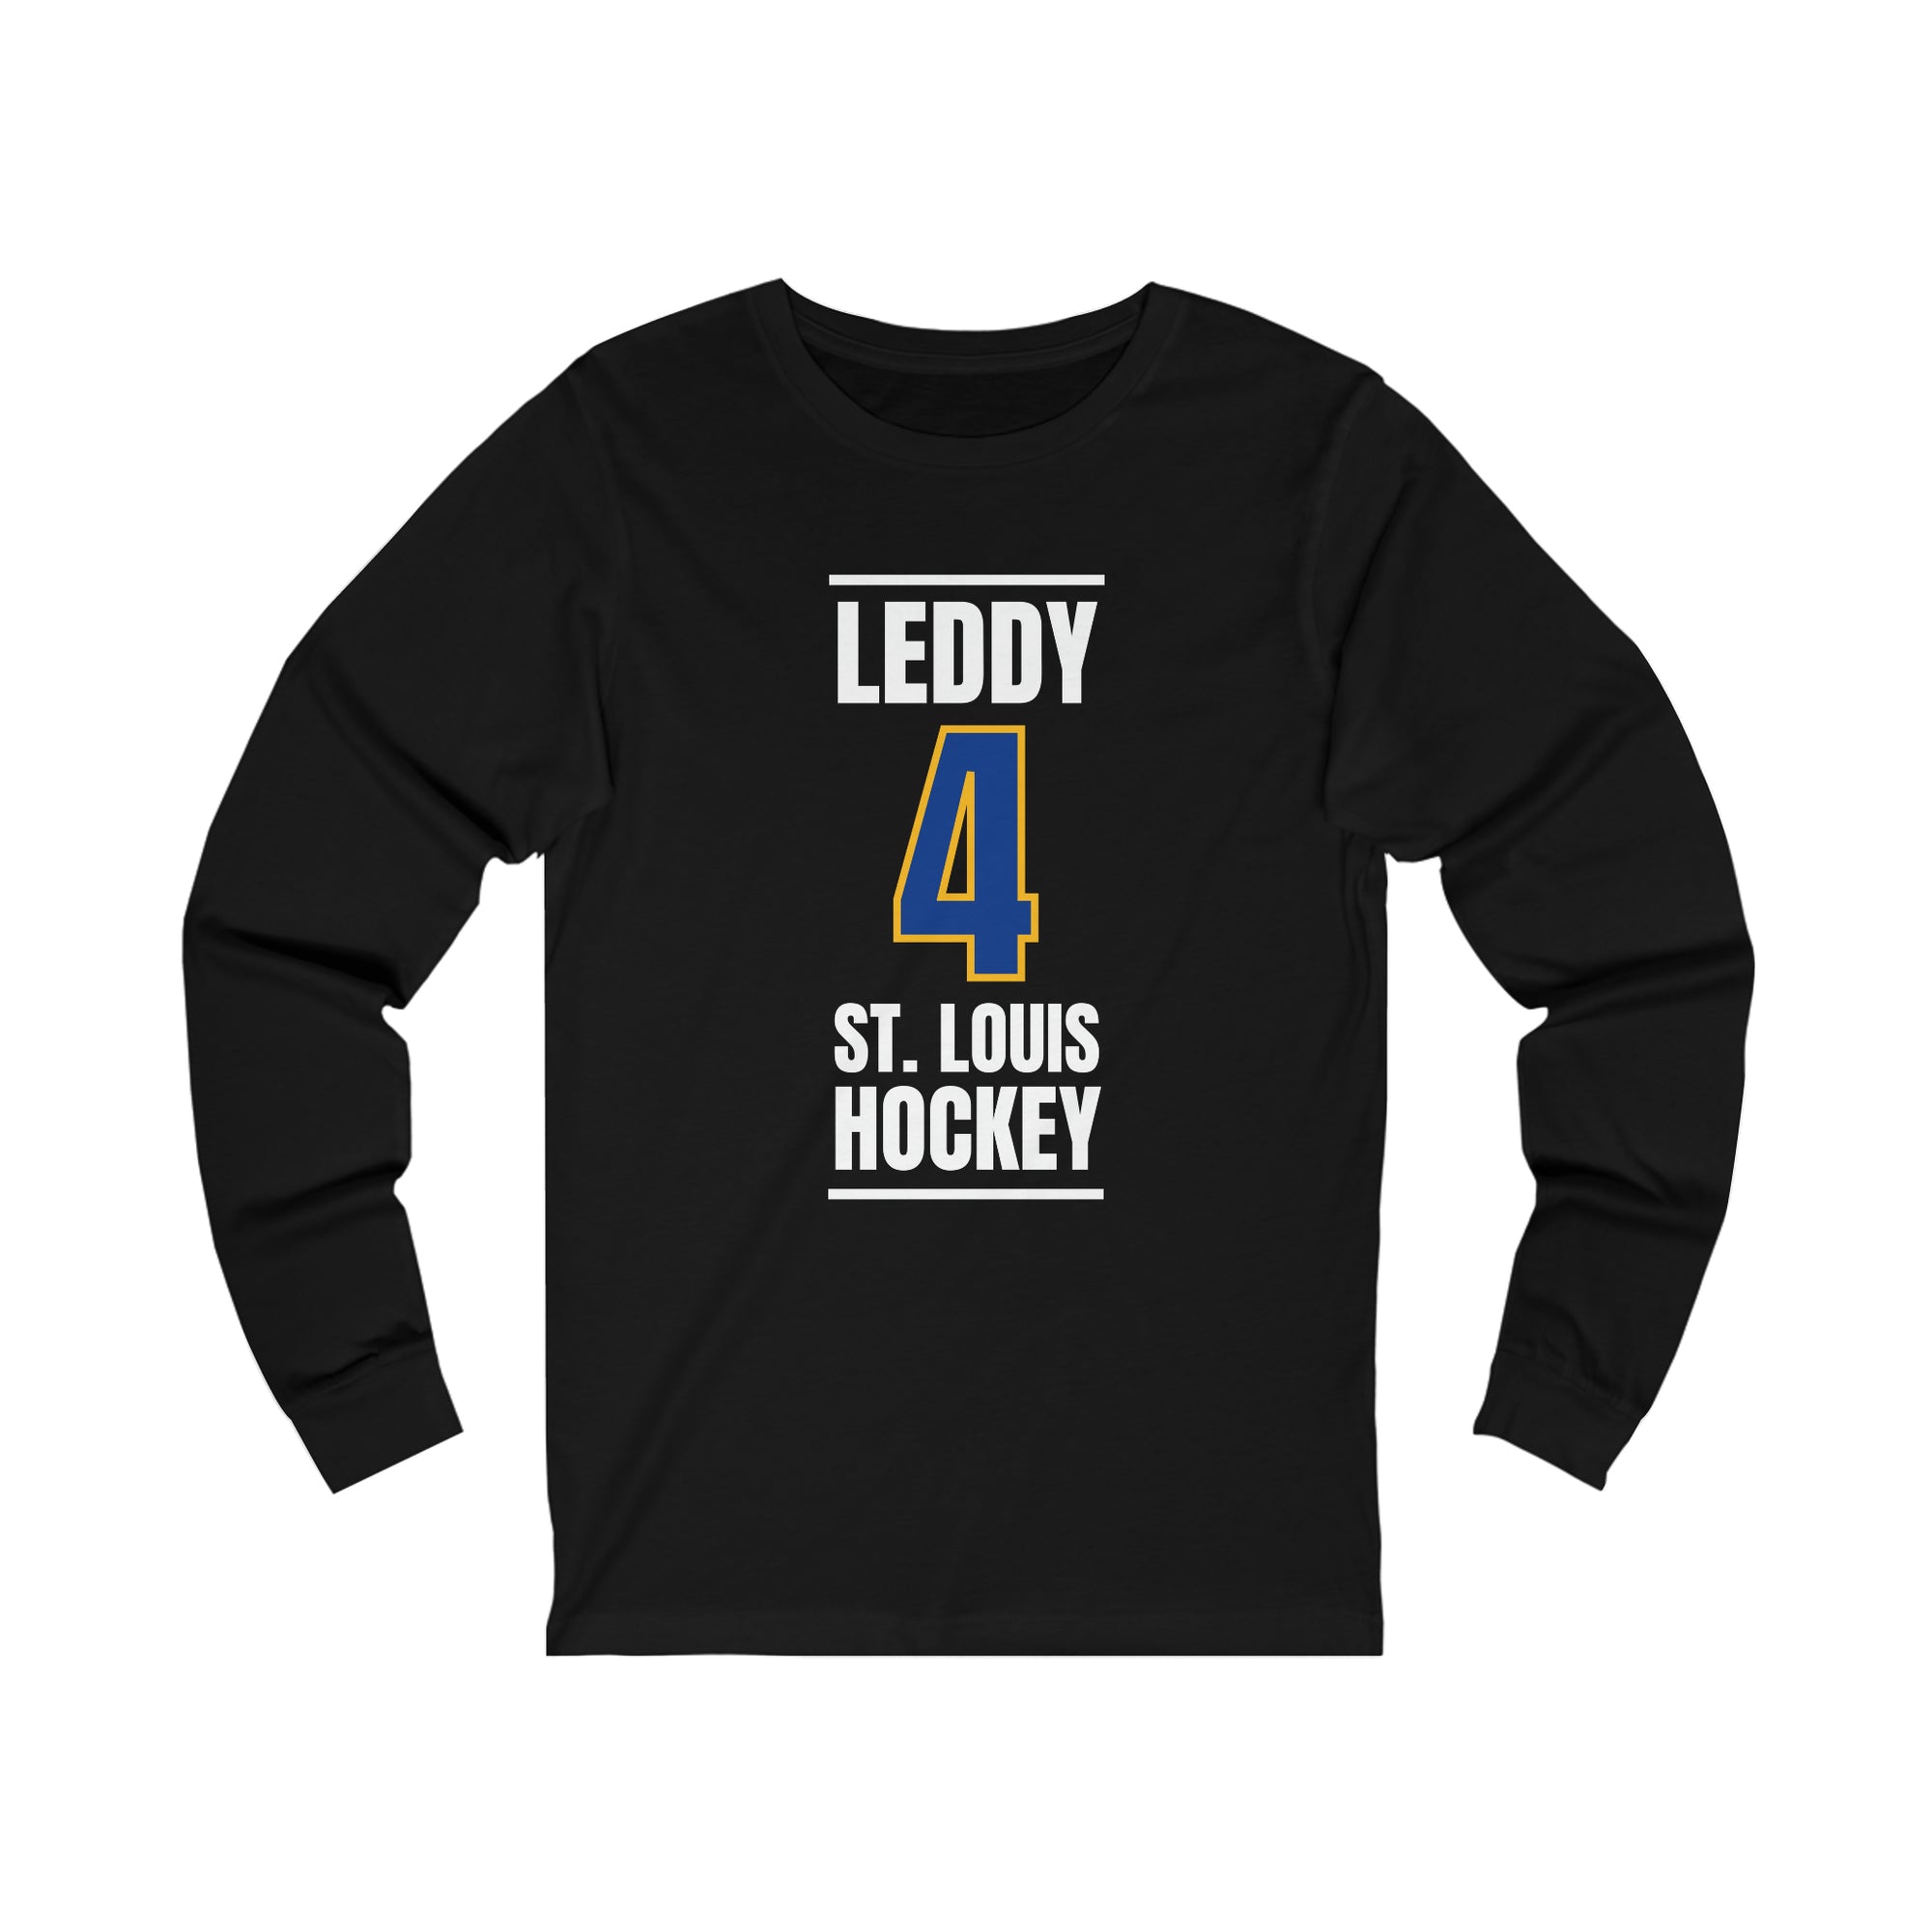 Leddy 4 St. Louis Hockey Blue Vertical Design Unisex Jersey Long Sleeve Shirt